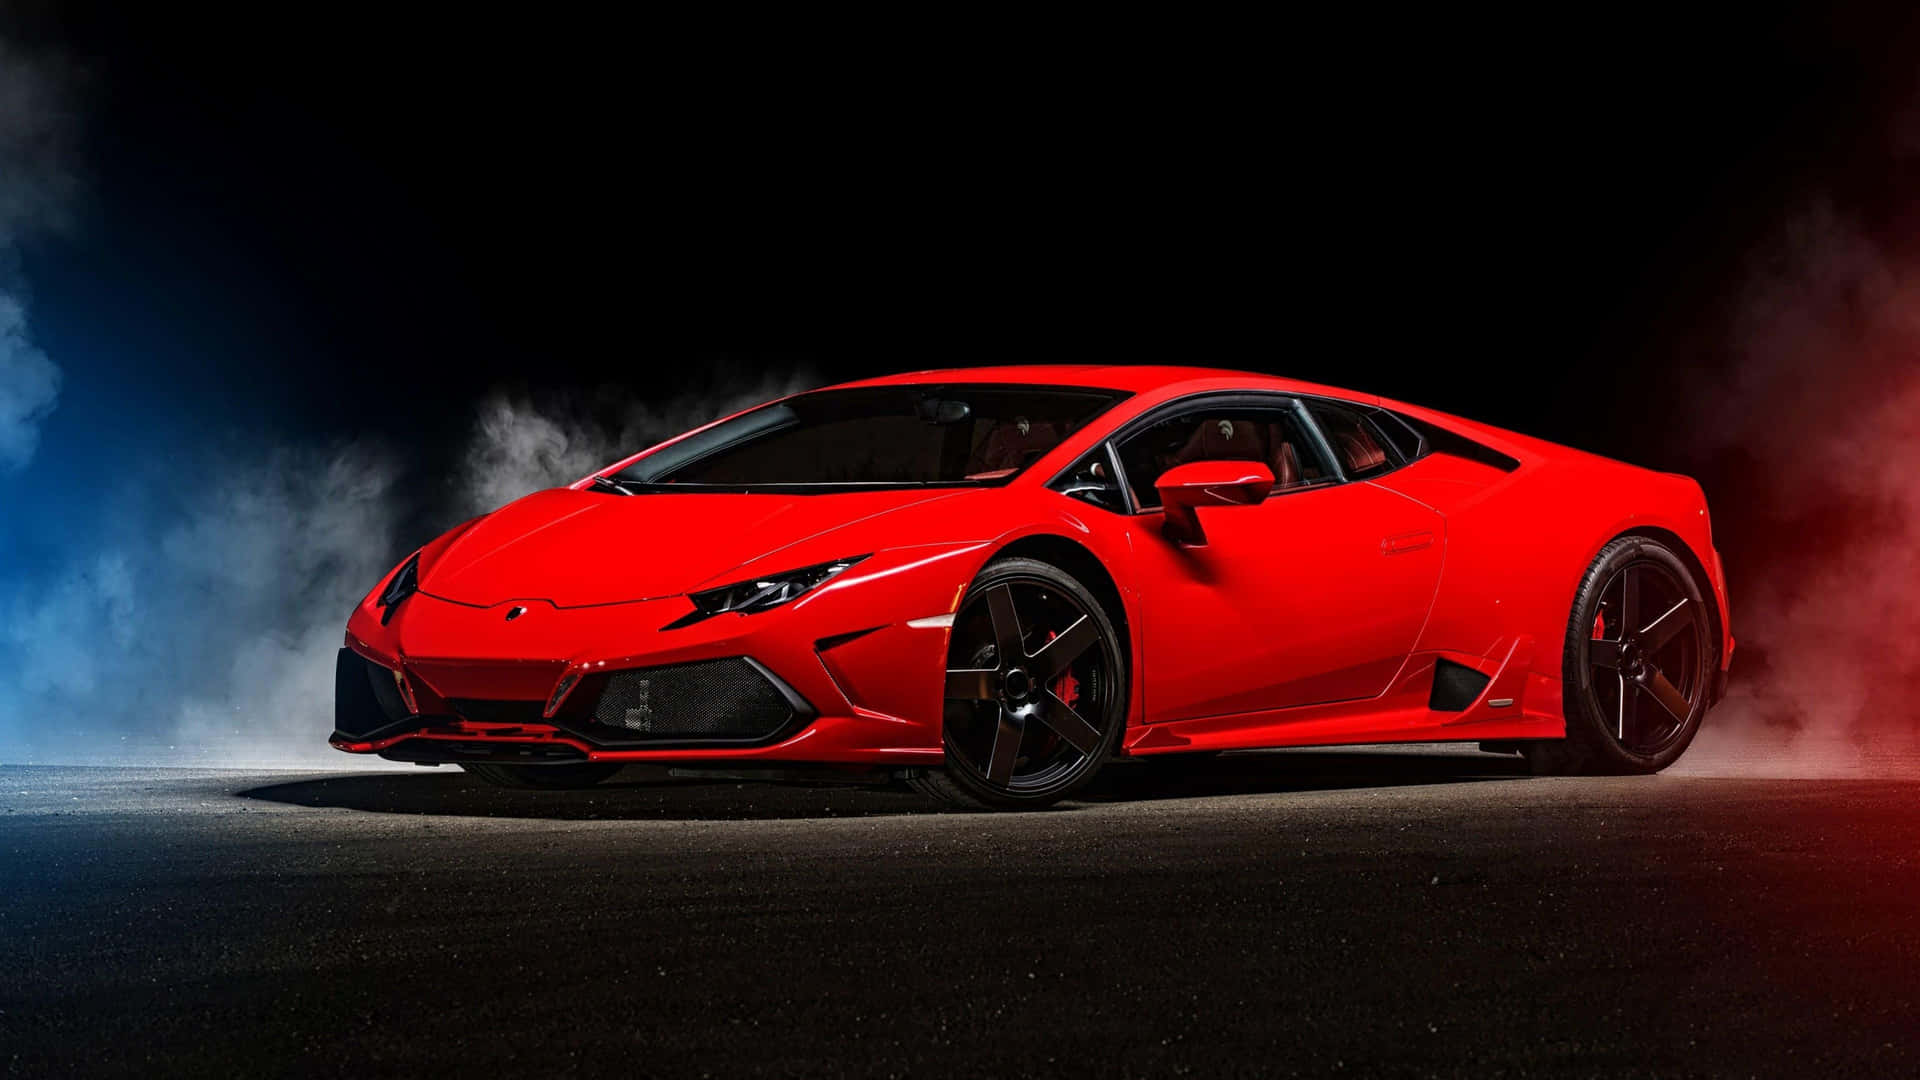 "The elegance of a 4k Lamborghini"